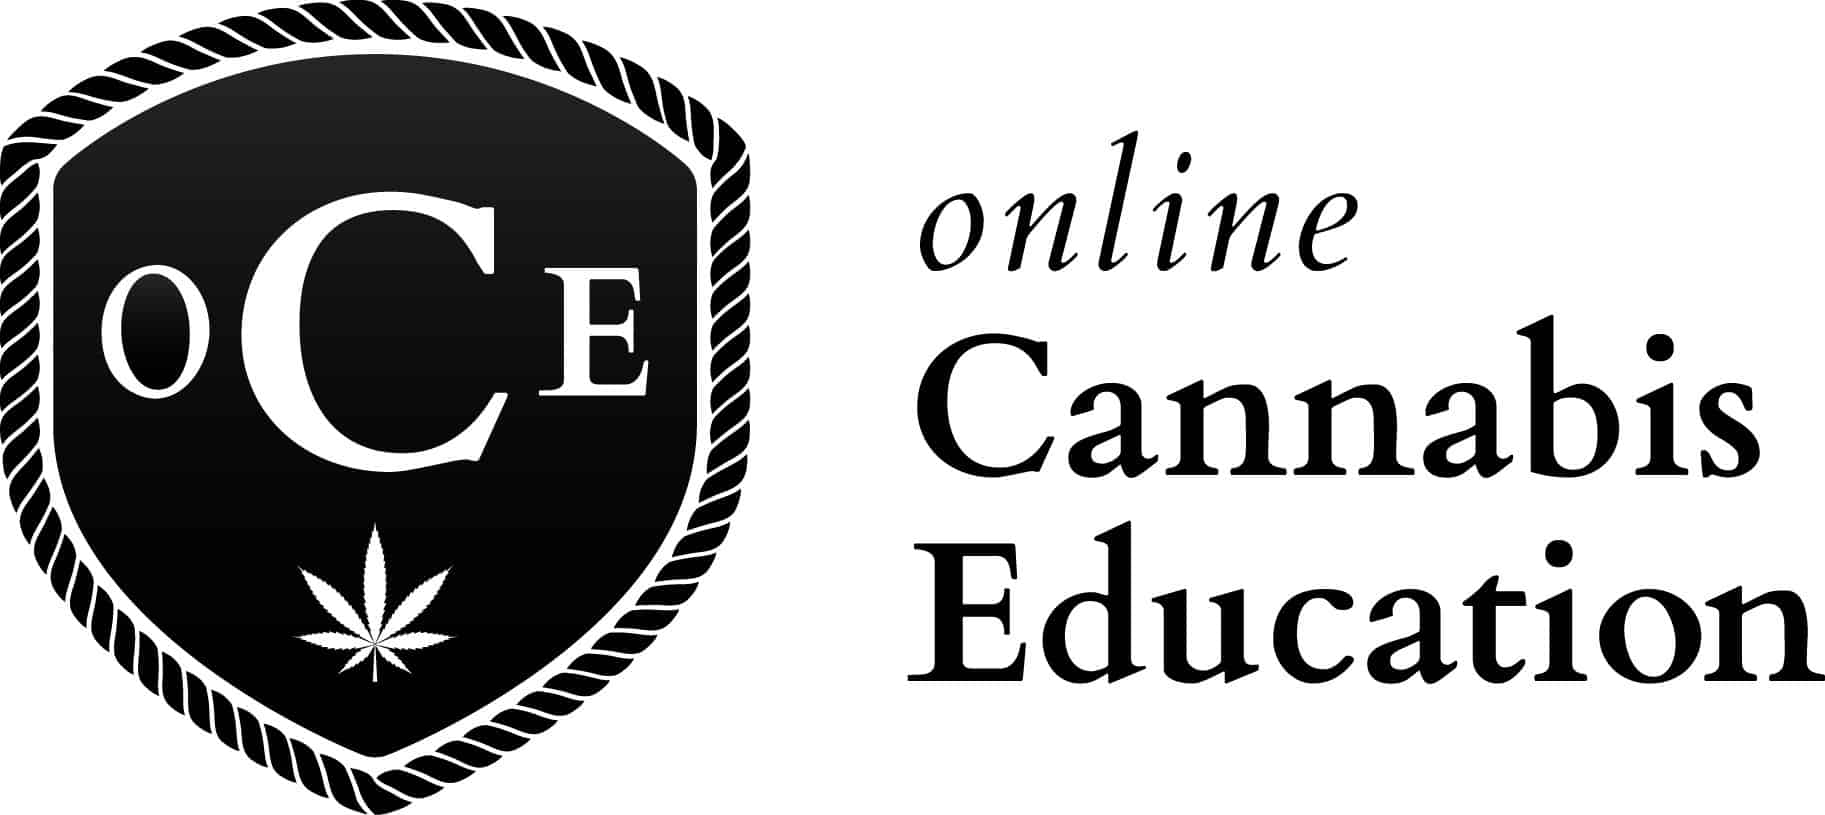 Online Cannabis Education logo